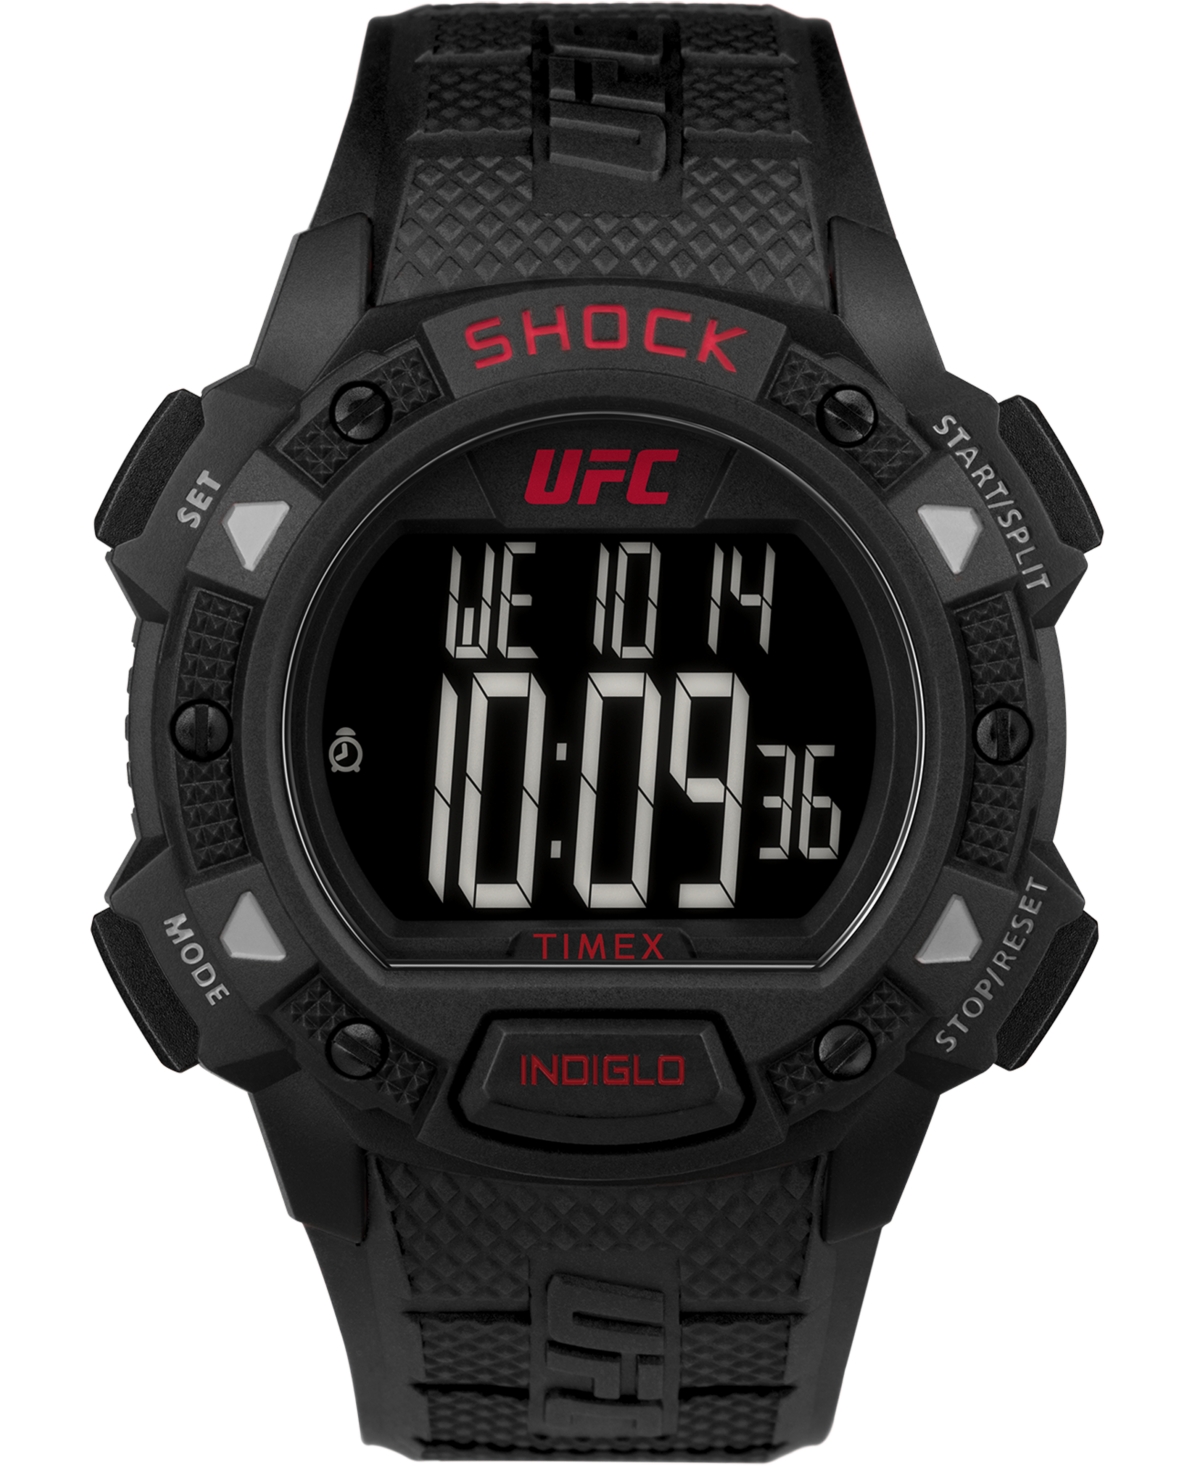 Timex Ufc Men's Quartz Core Resin Black Shock Watch, 45mm